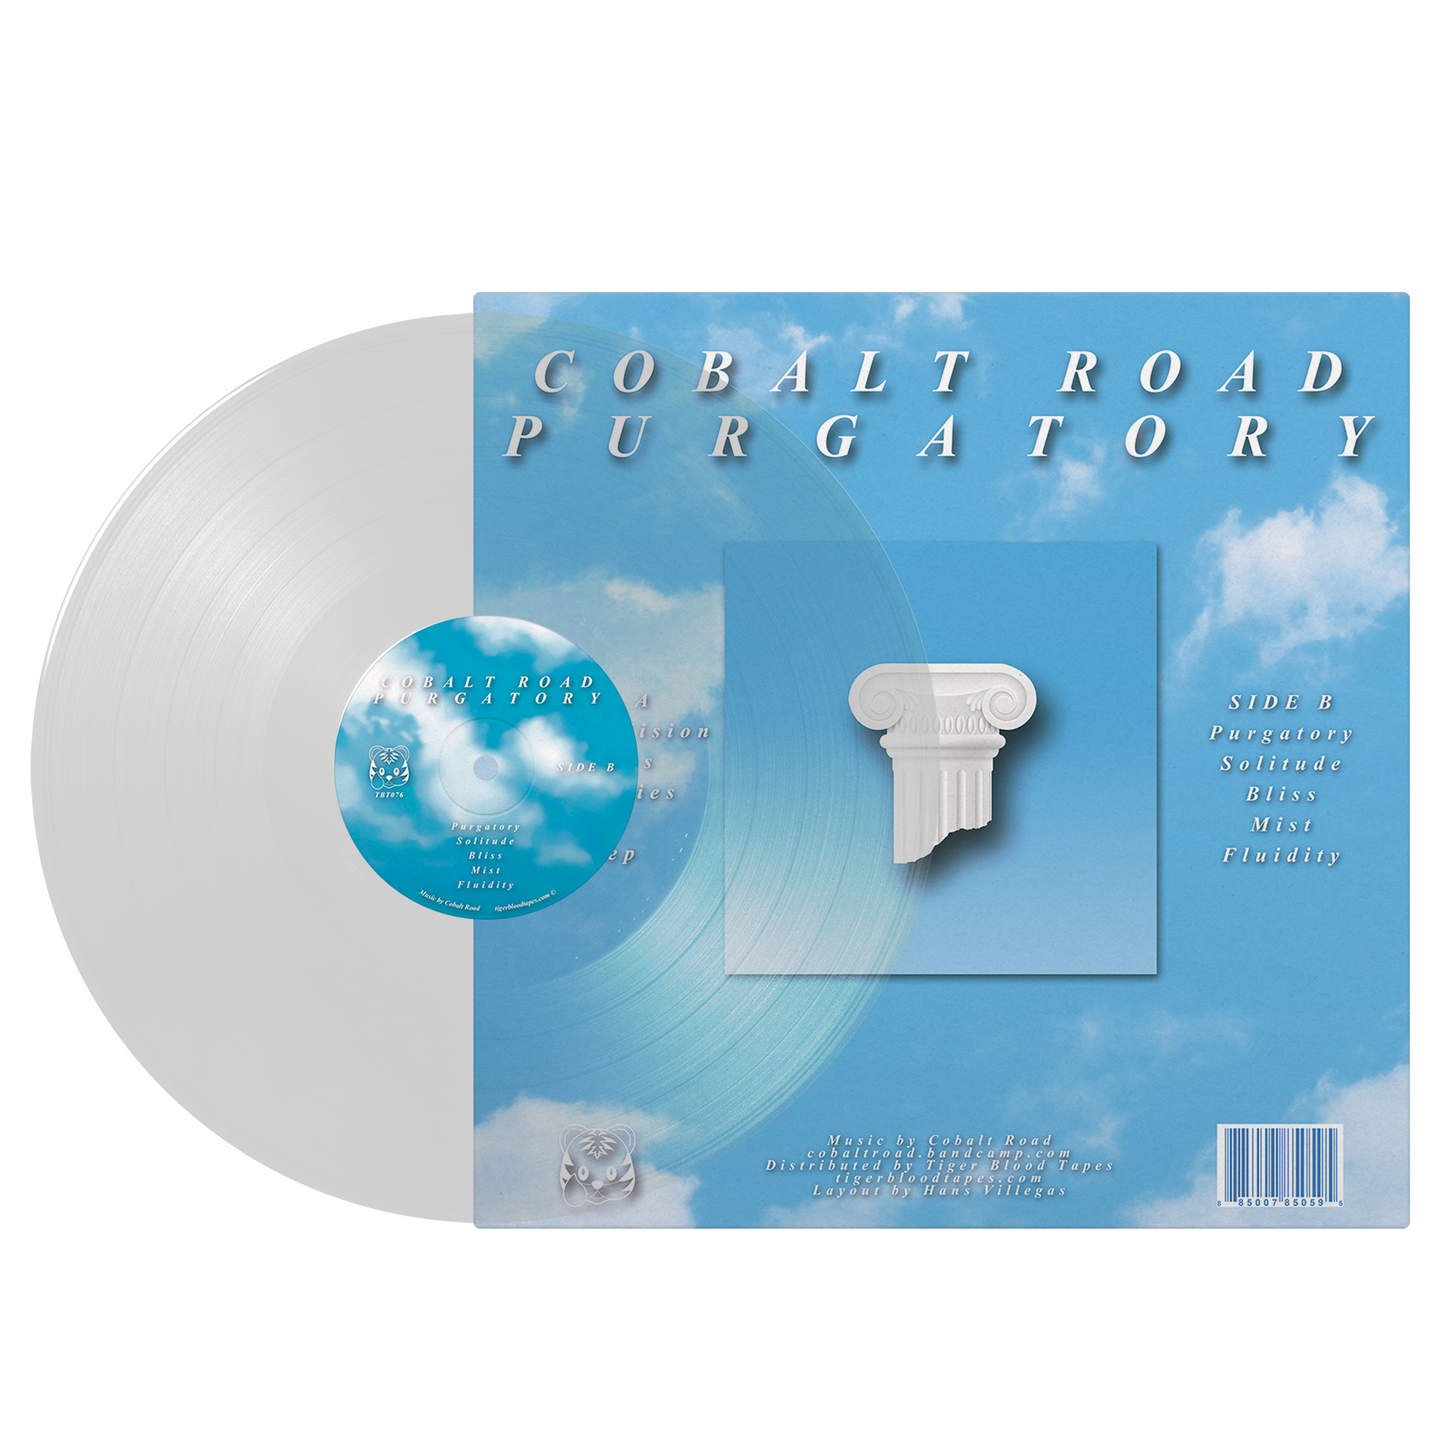 Cobalt Road - "Purgatory" Cloudy Sky Limited Edition 12" Vinyl LP